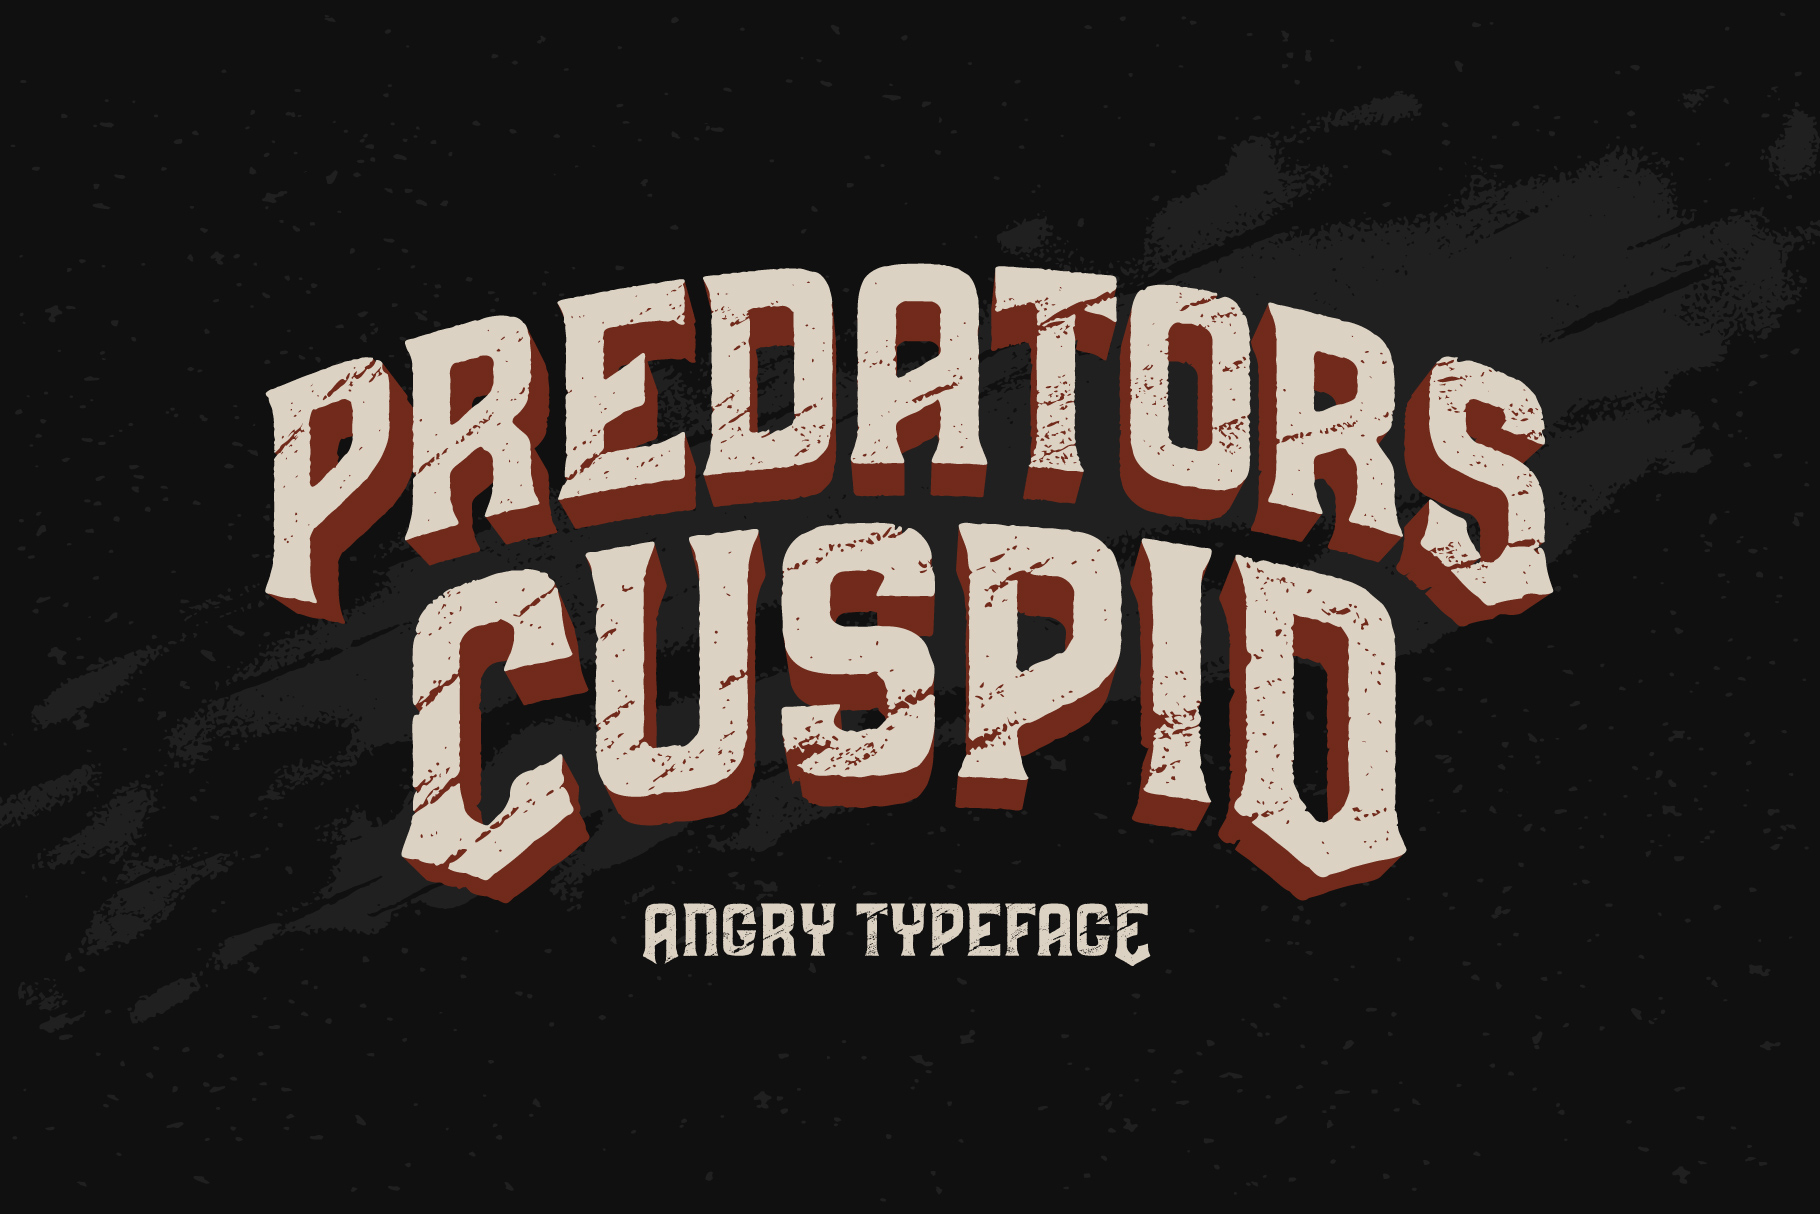 Predators Cuspid Font Facebook image.